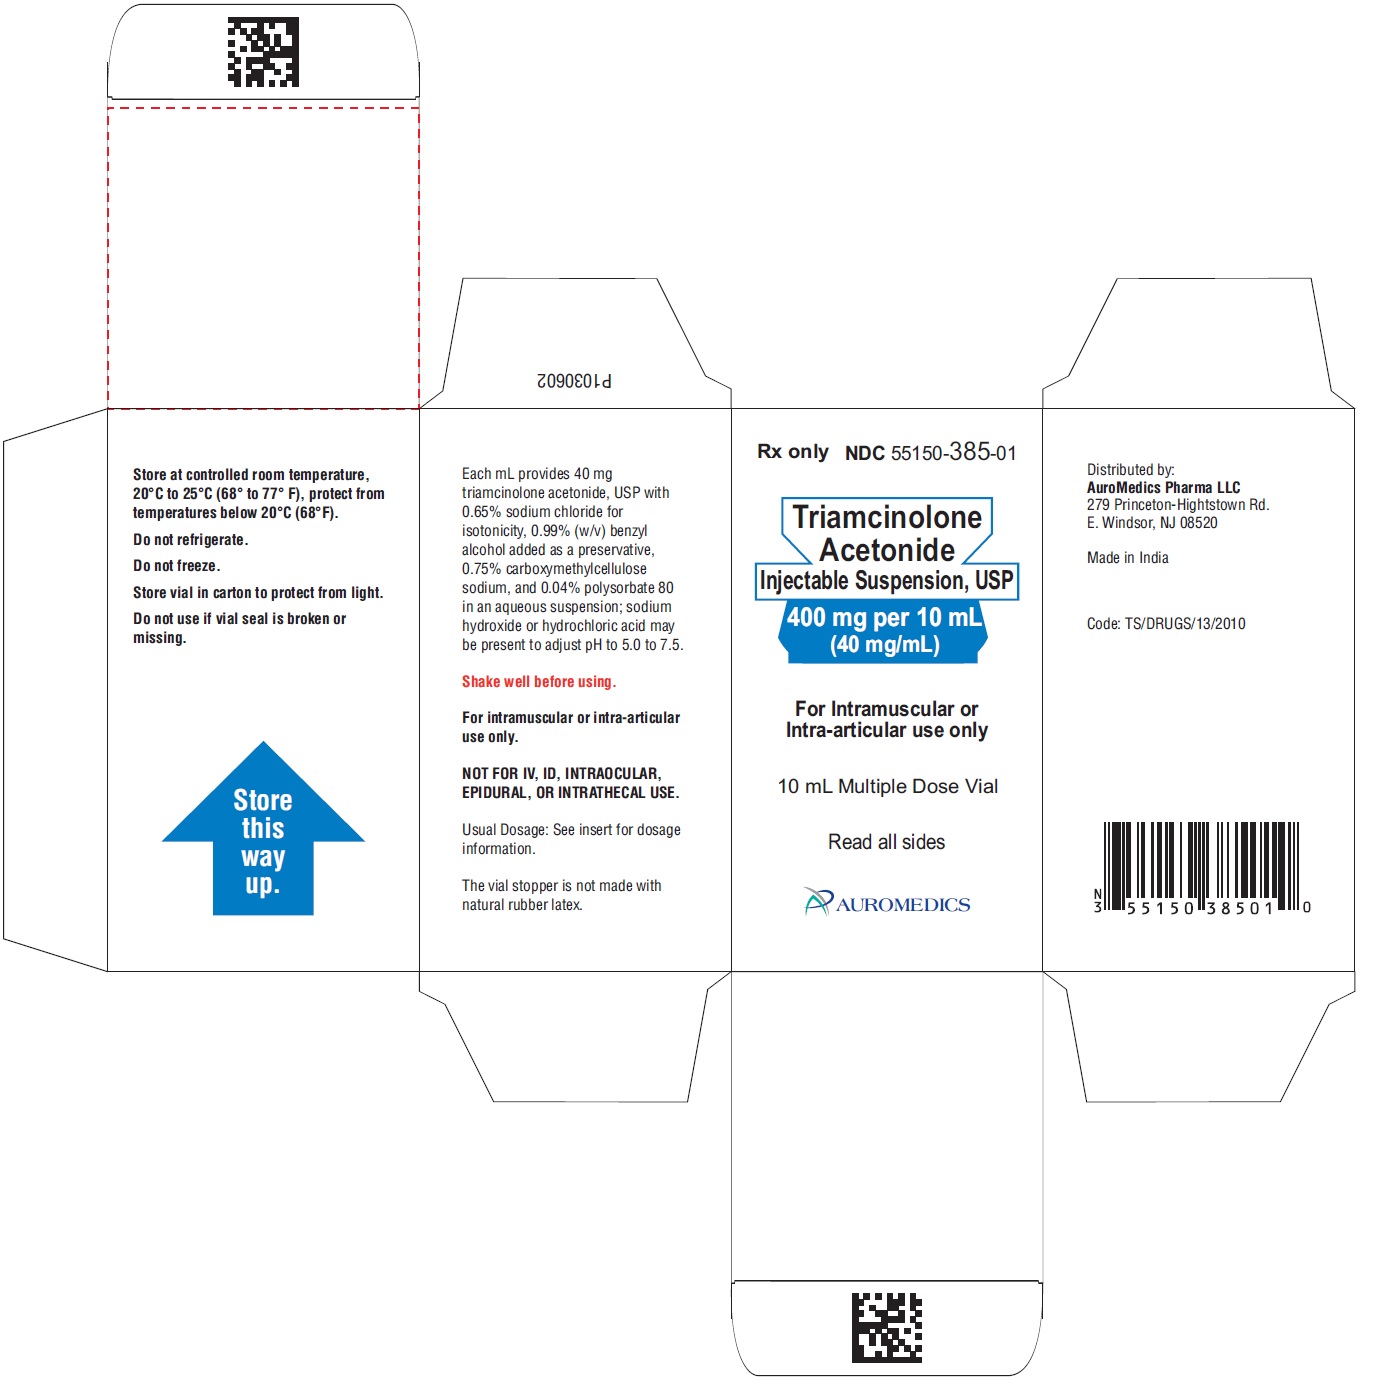 PACKAGE LABEL-PRINCIPAL DISPLAY PANEL-400 mg per 10 mL (40 mg/mL) - Container-Carton (1 Vial)